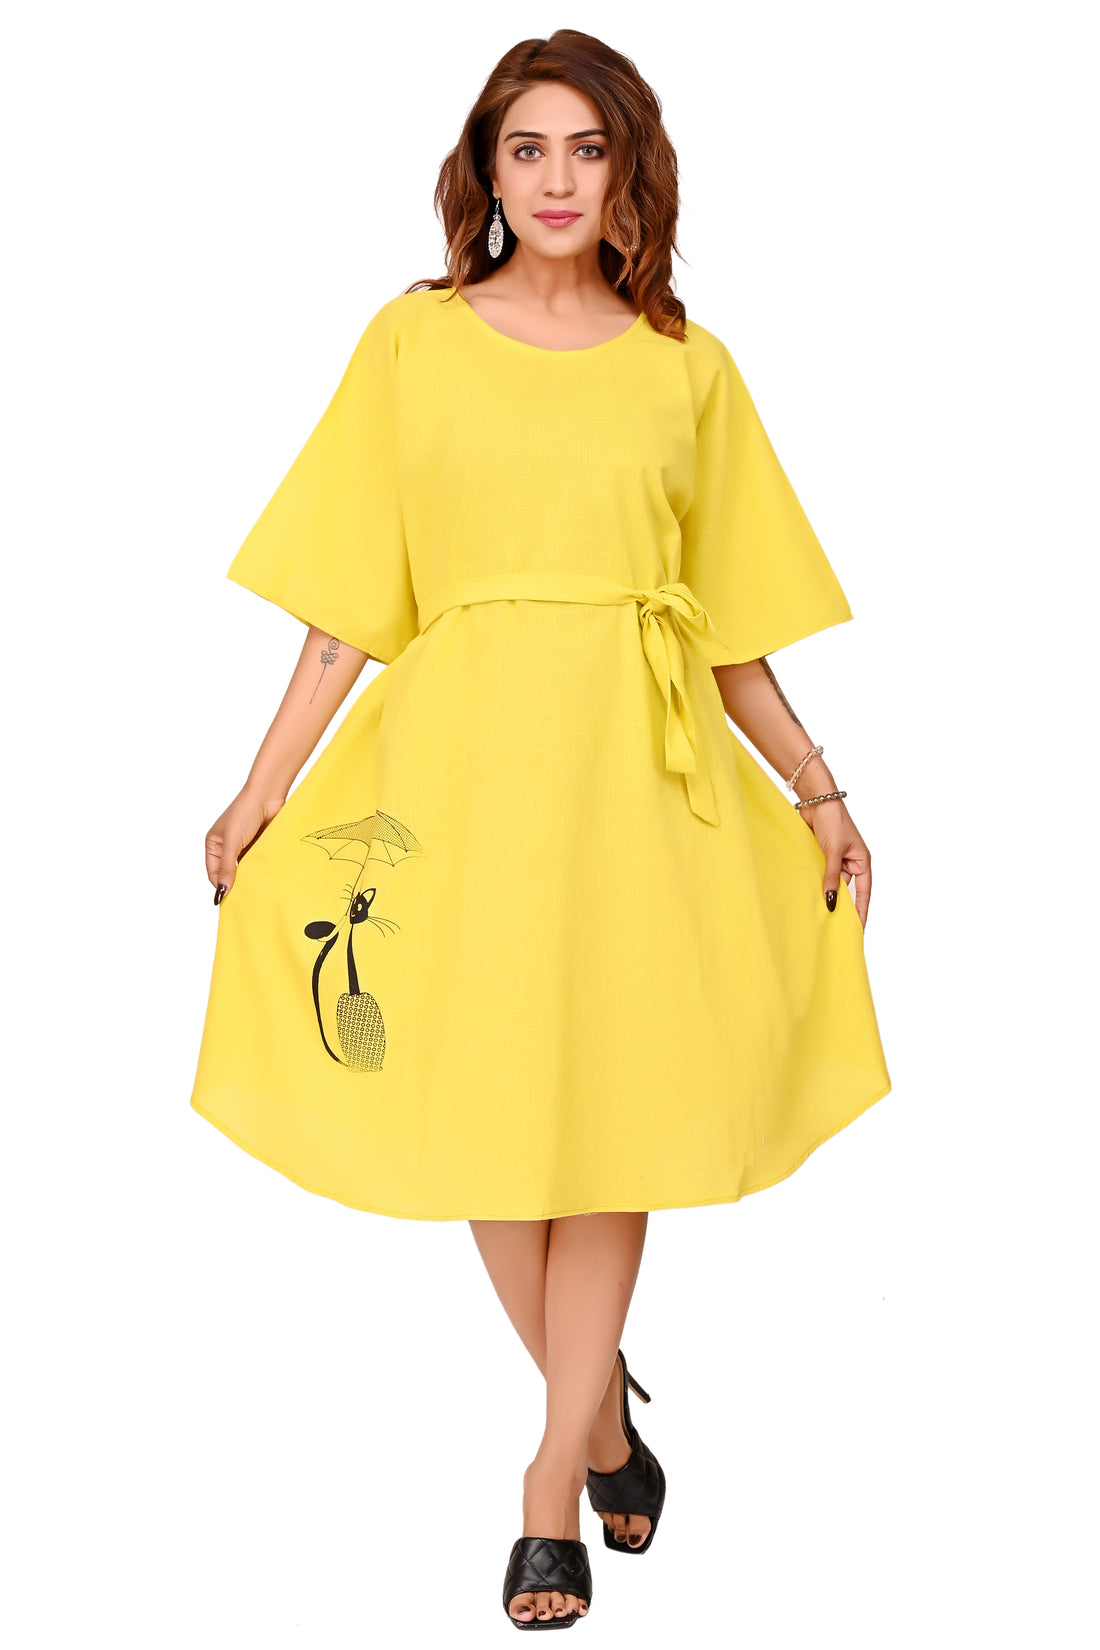 Nirmal online Premium Quality Cotton Slub Tunic Dress for Women in Yellow Colour